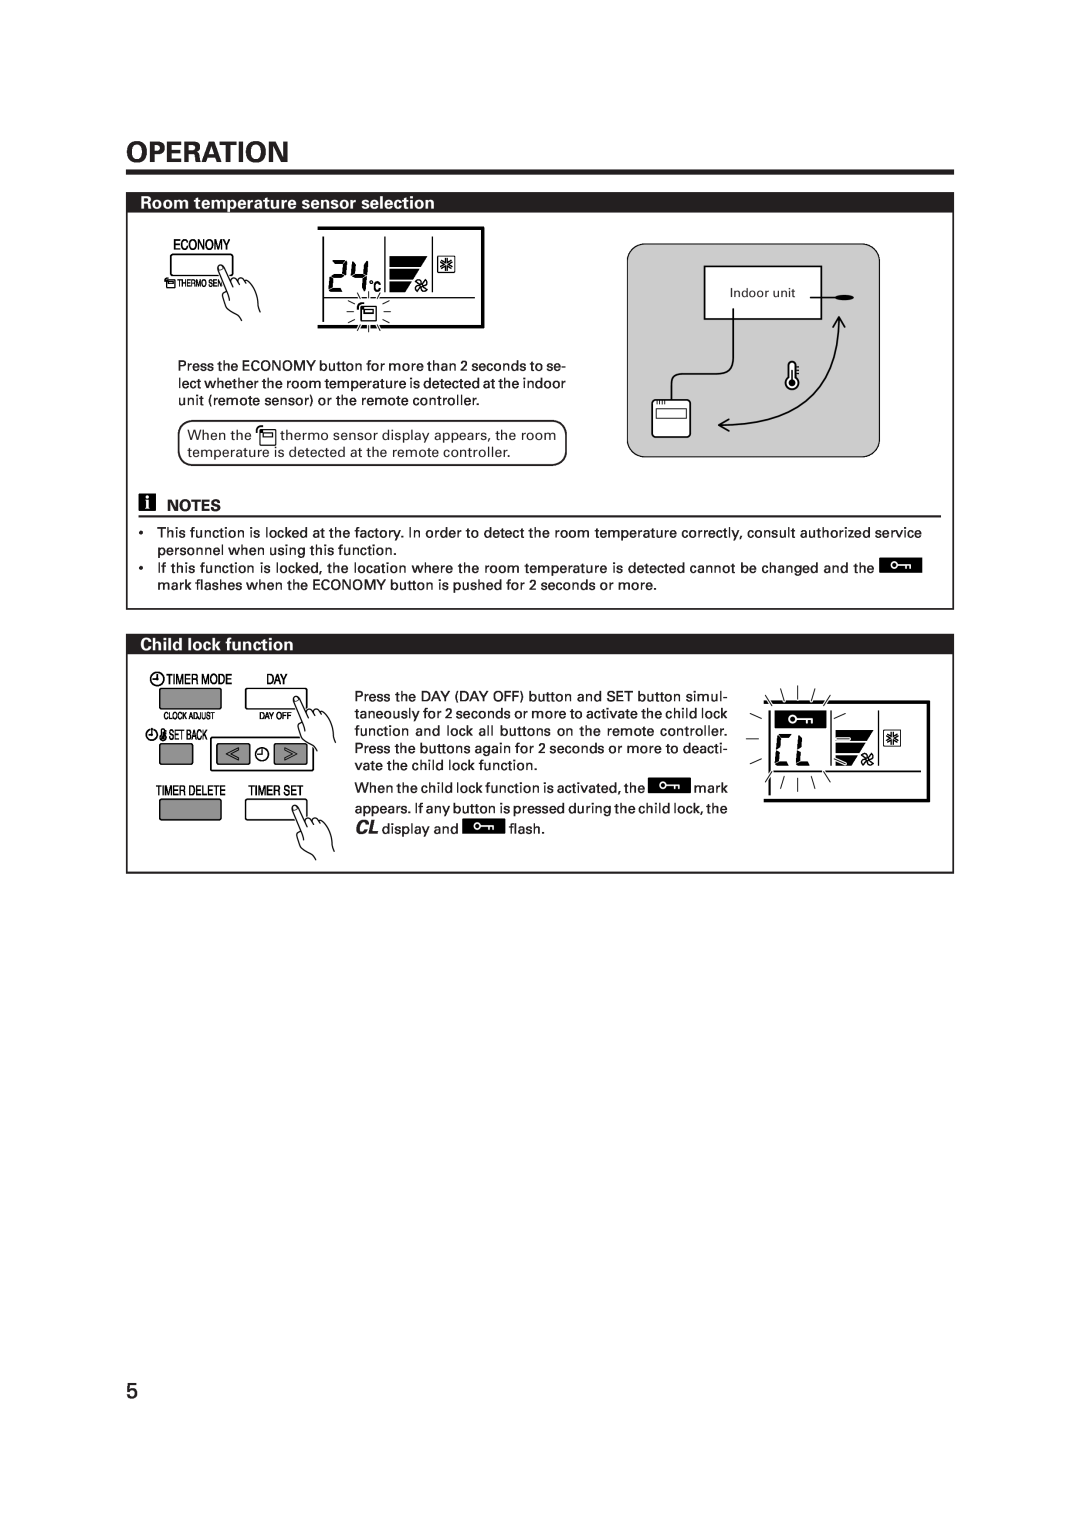 Fujitsu R410A operation manual Operation, Room temperature sensor selection, Child lock function 